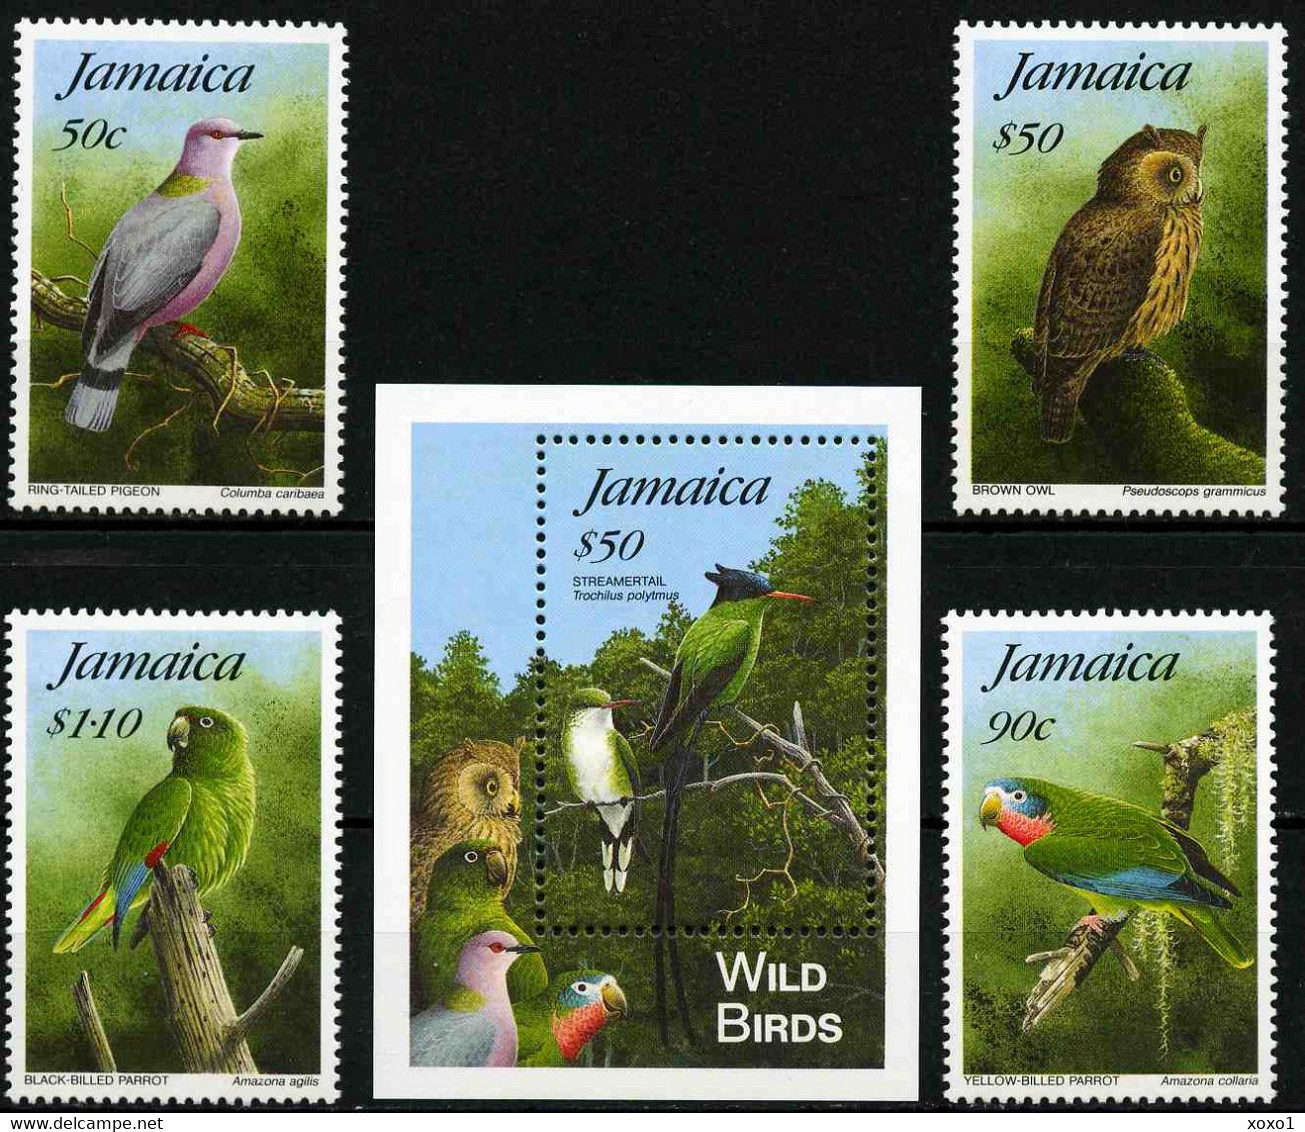 Jamaica 1995 MiNr. 852 - 855(Block 42) Jamaika Birds 4v+1bl MNH** 21,00 € - Uilen